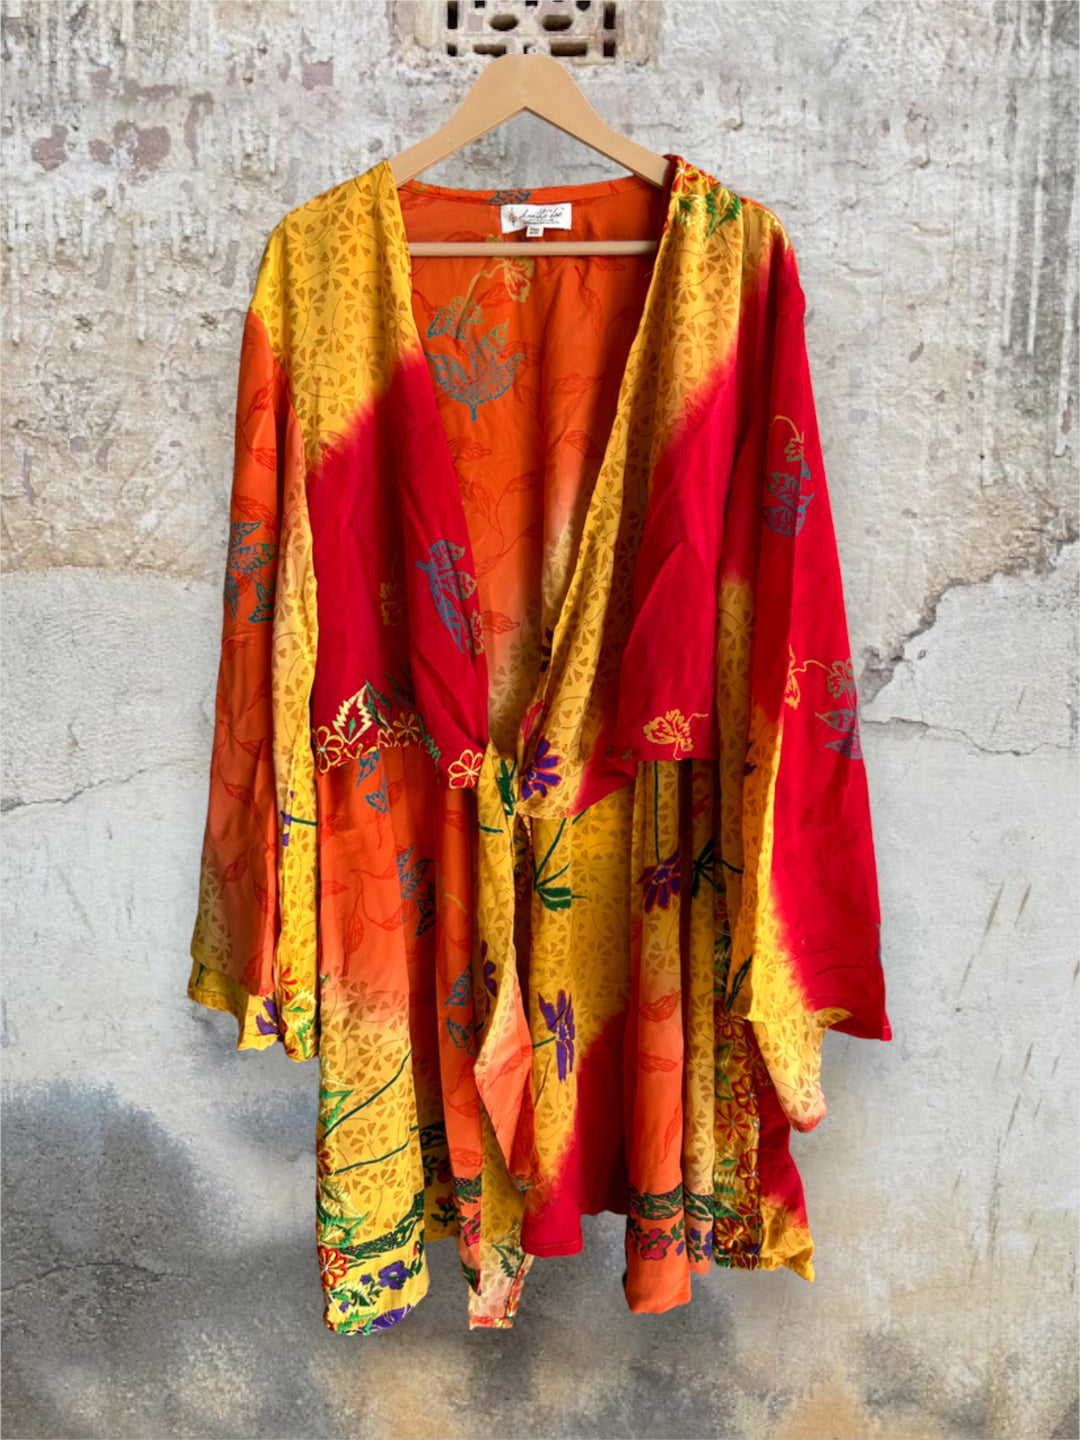 Shortie Spellbound Kimono 02 189 - Kantha Bae